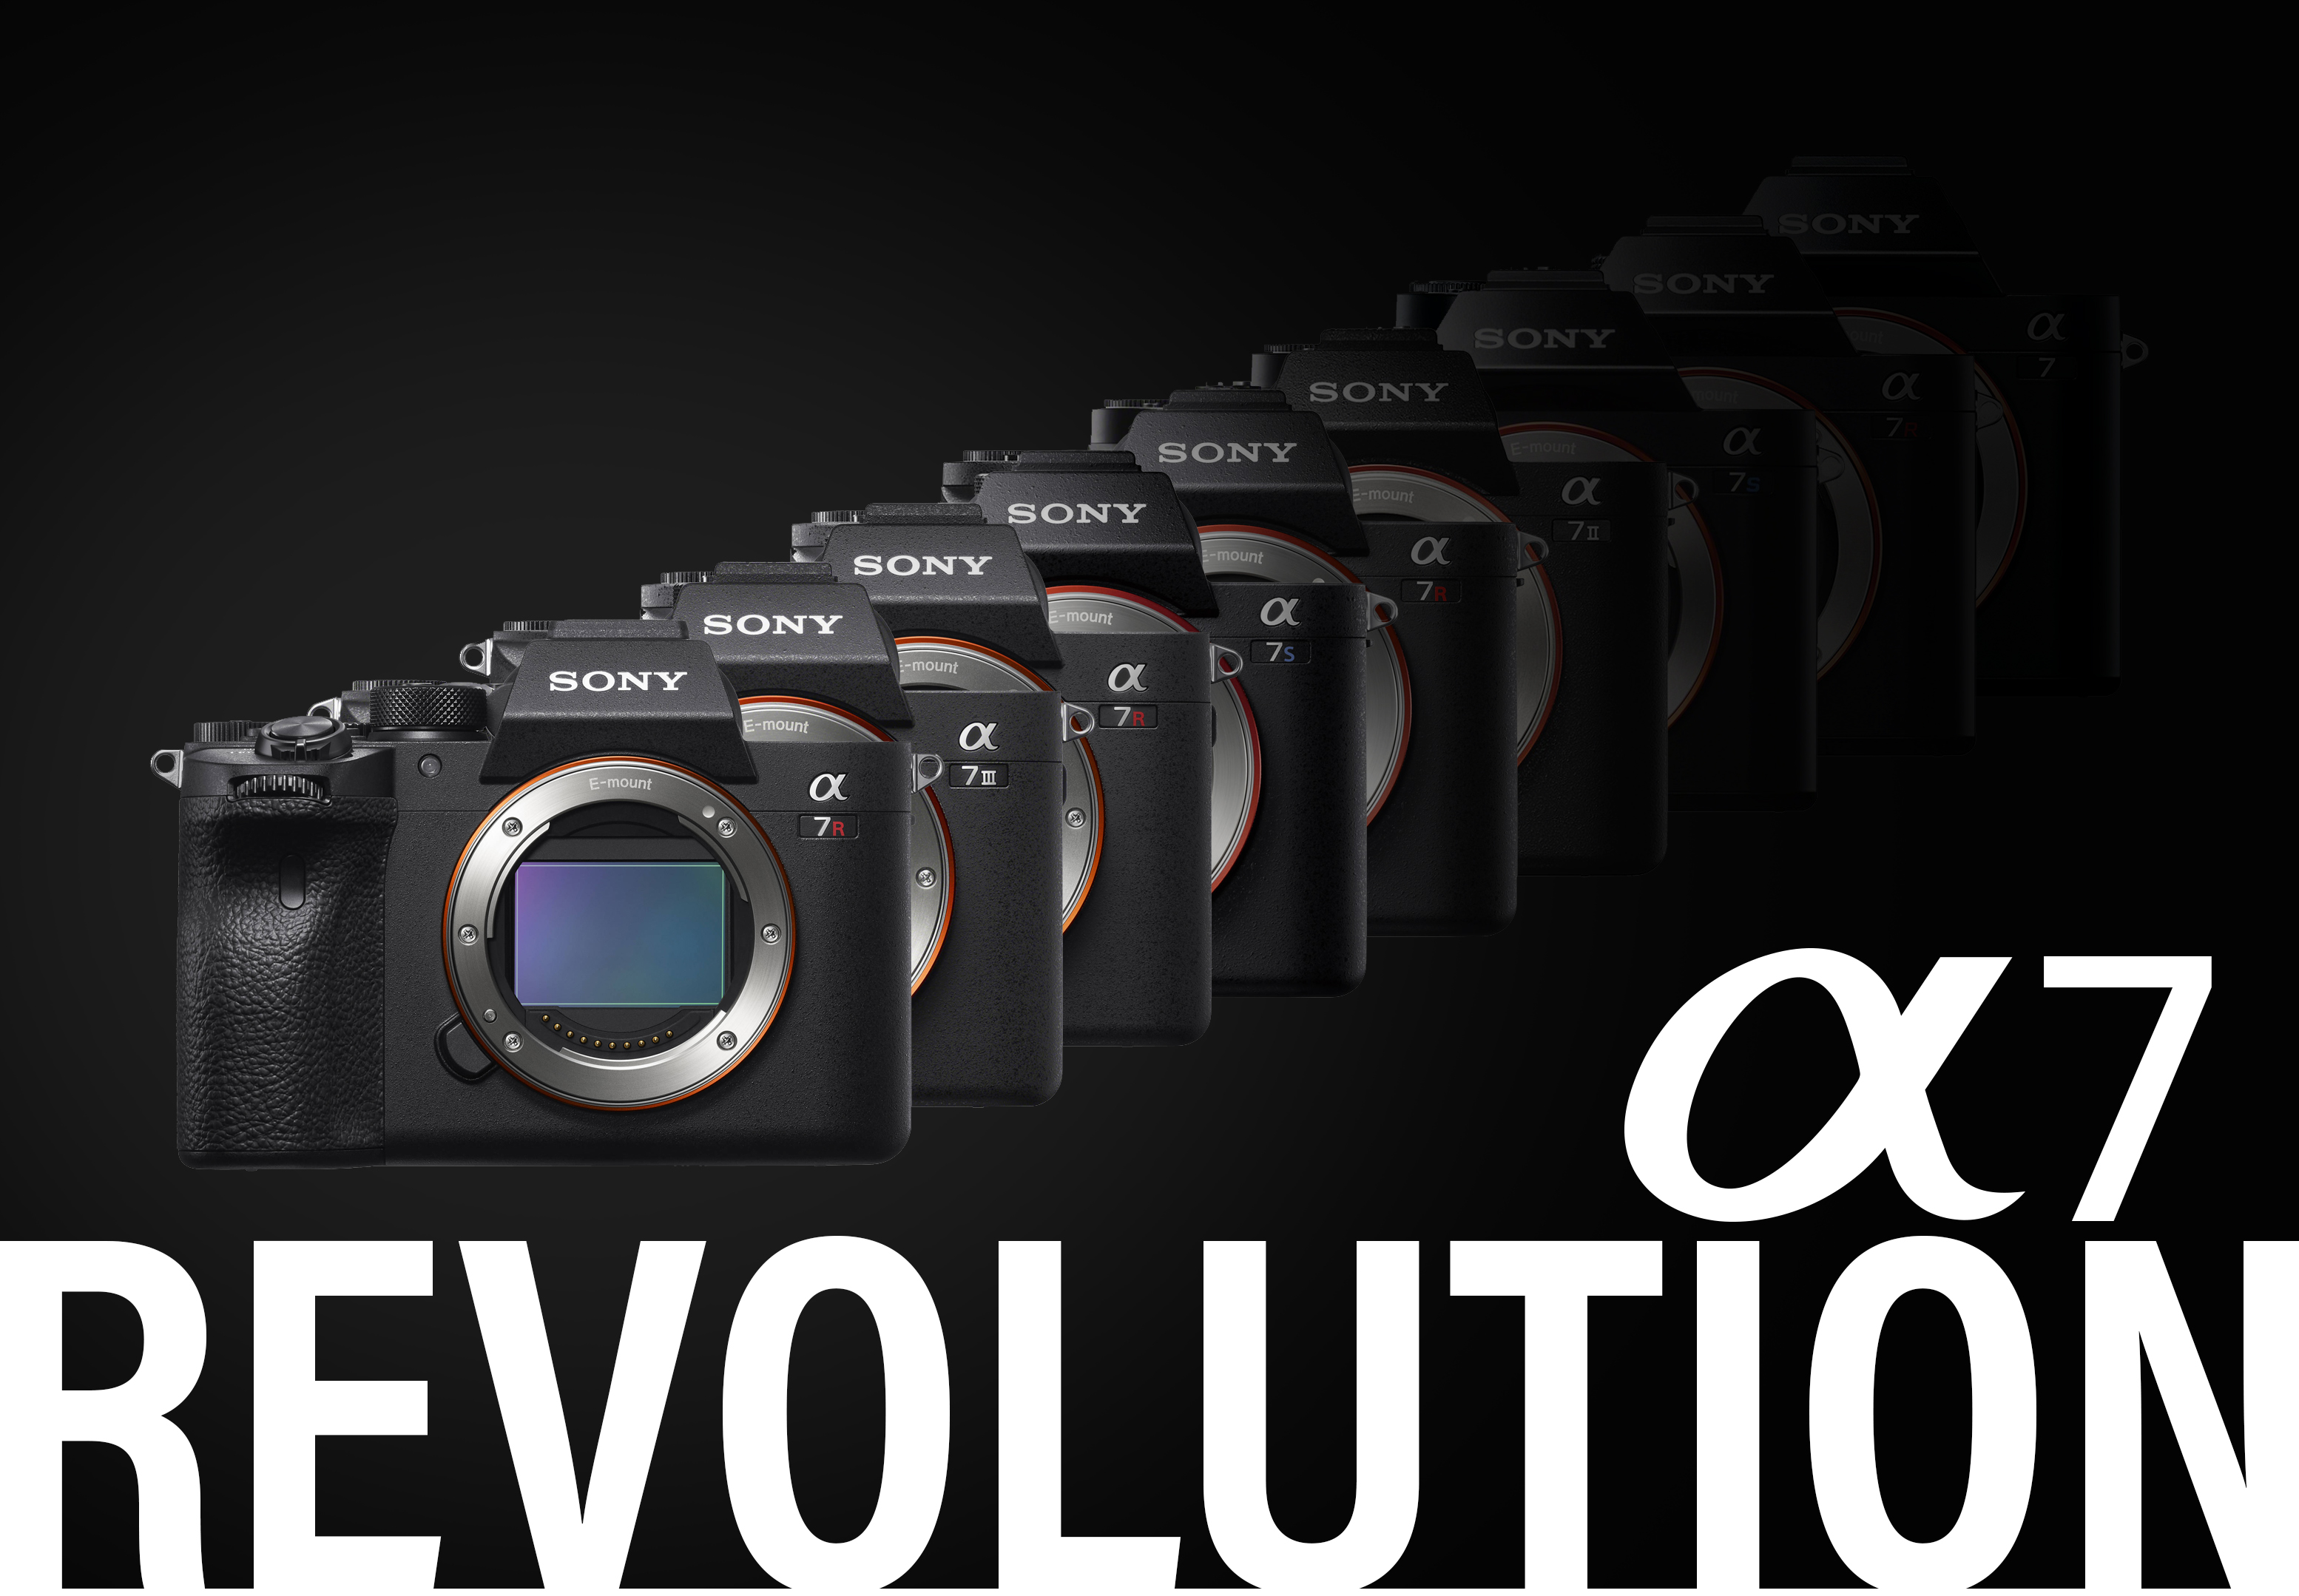 The Sony α7 Revolution